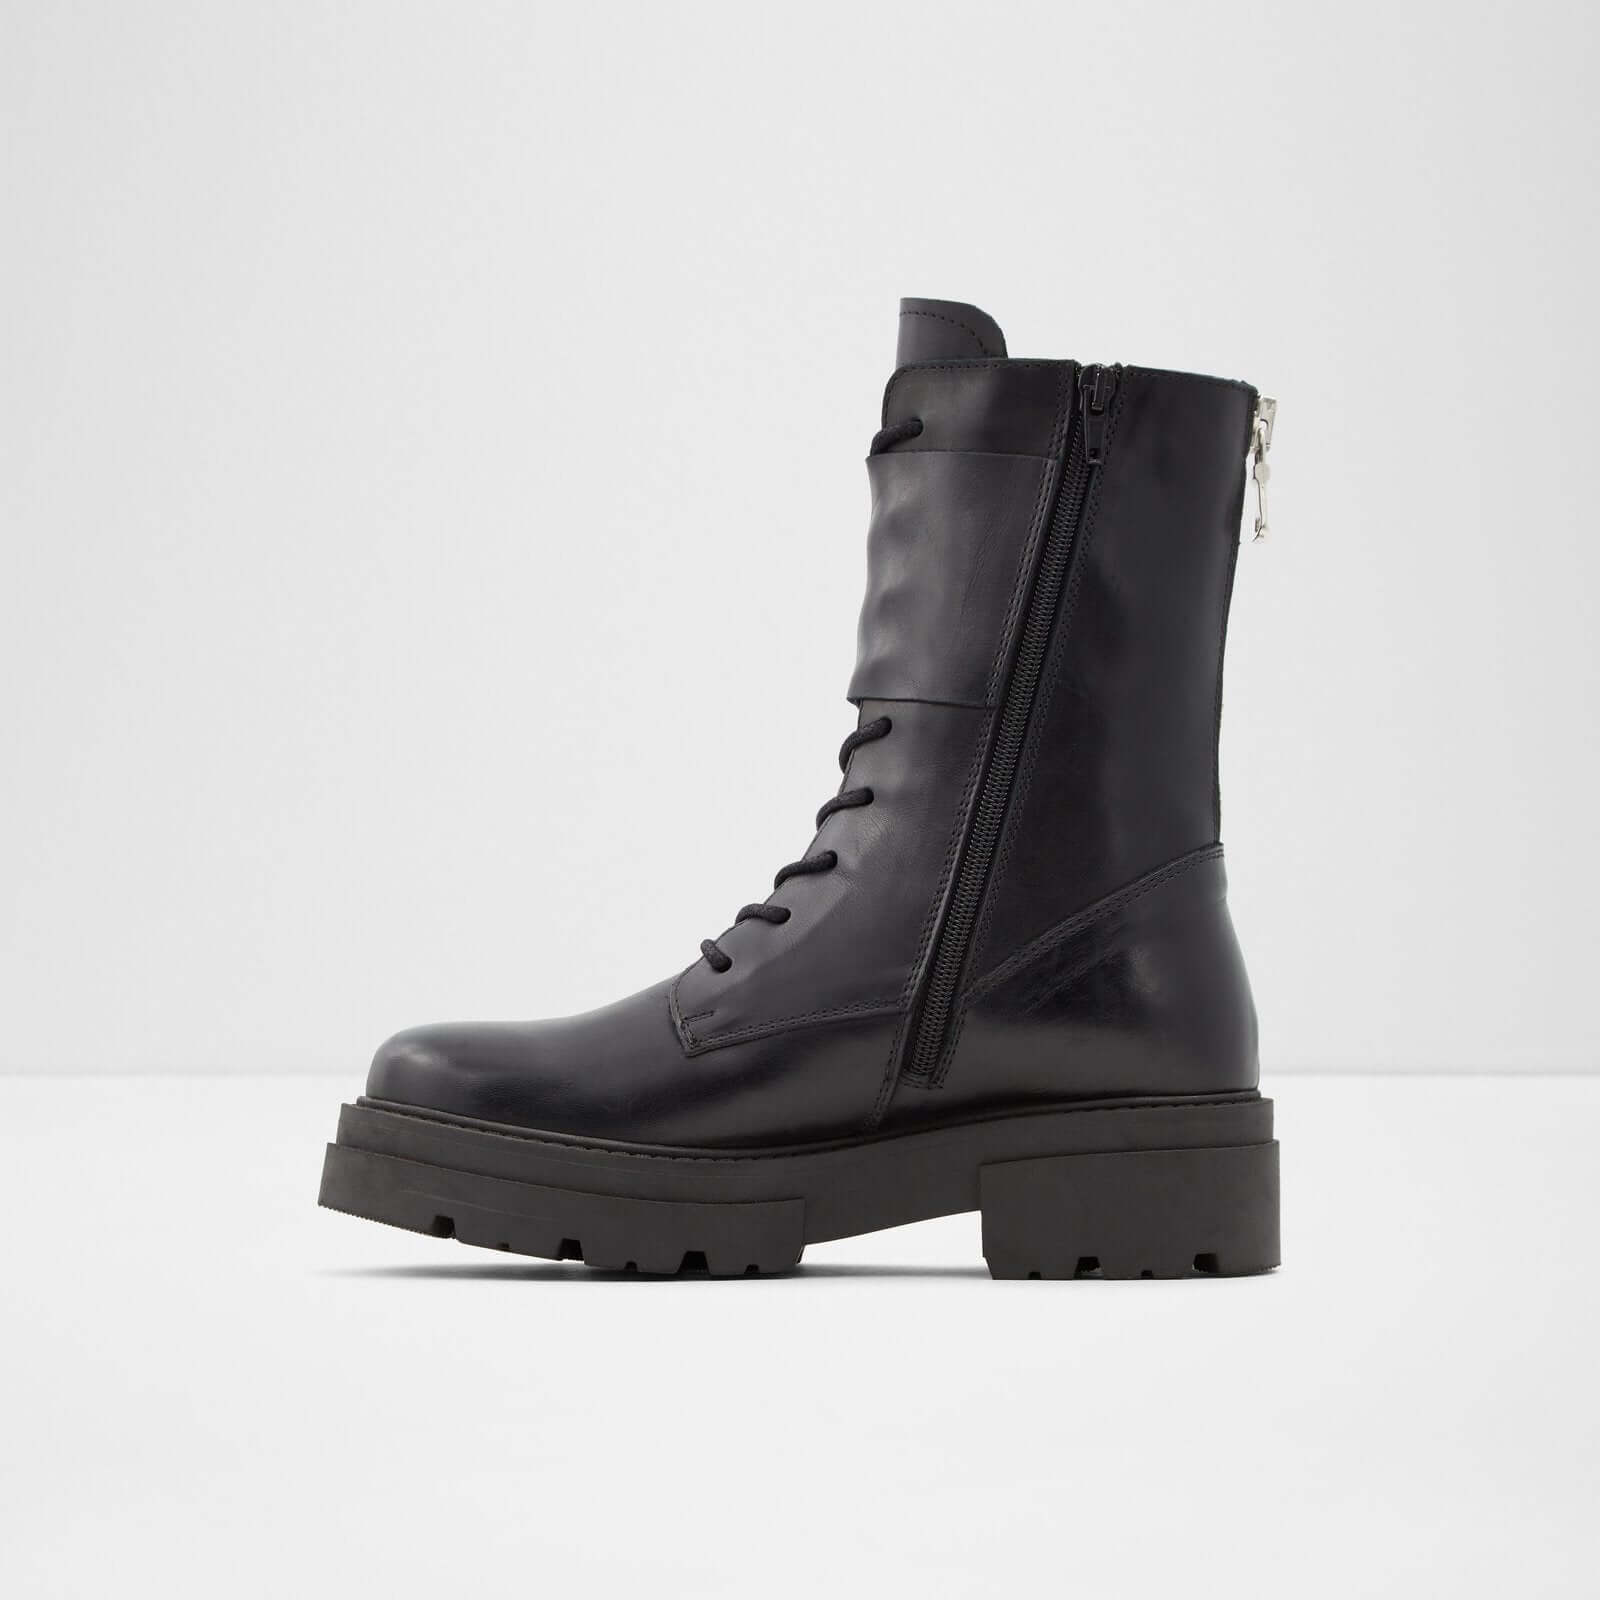 Aldo Women's Lace Up Boot Baonia (Black) – ALDO Shoes UK